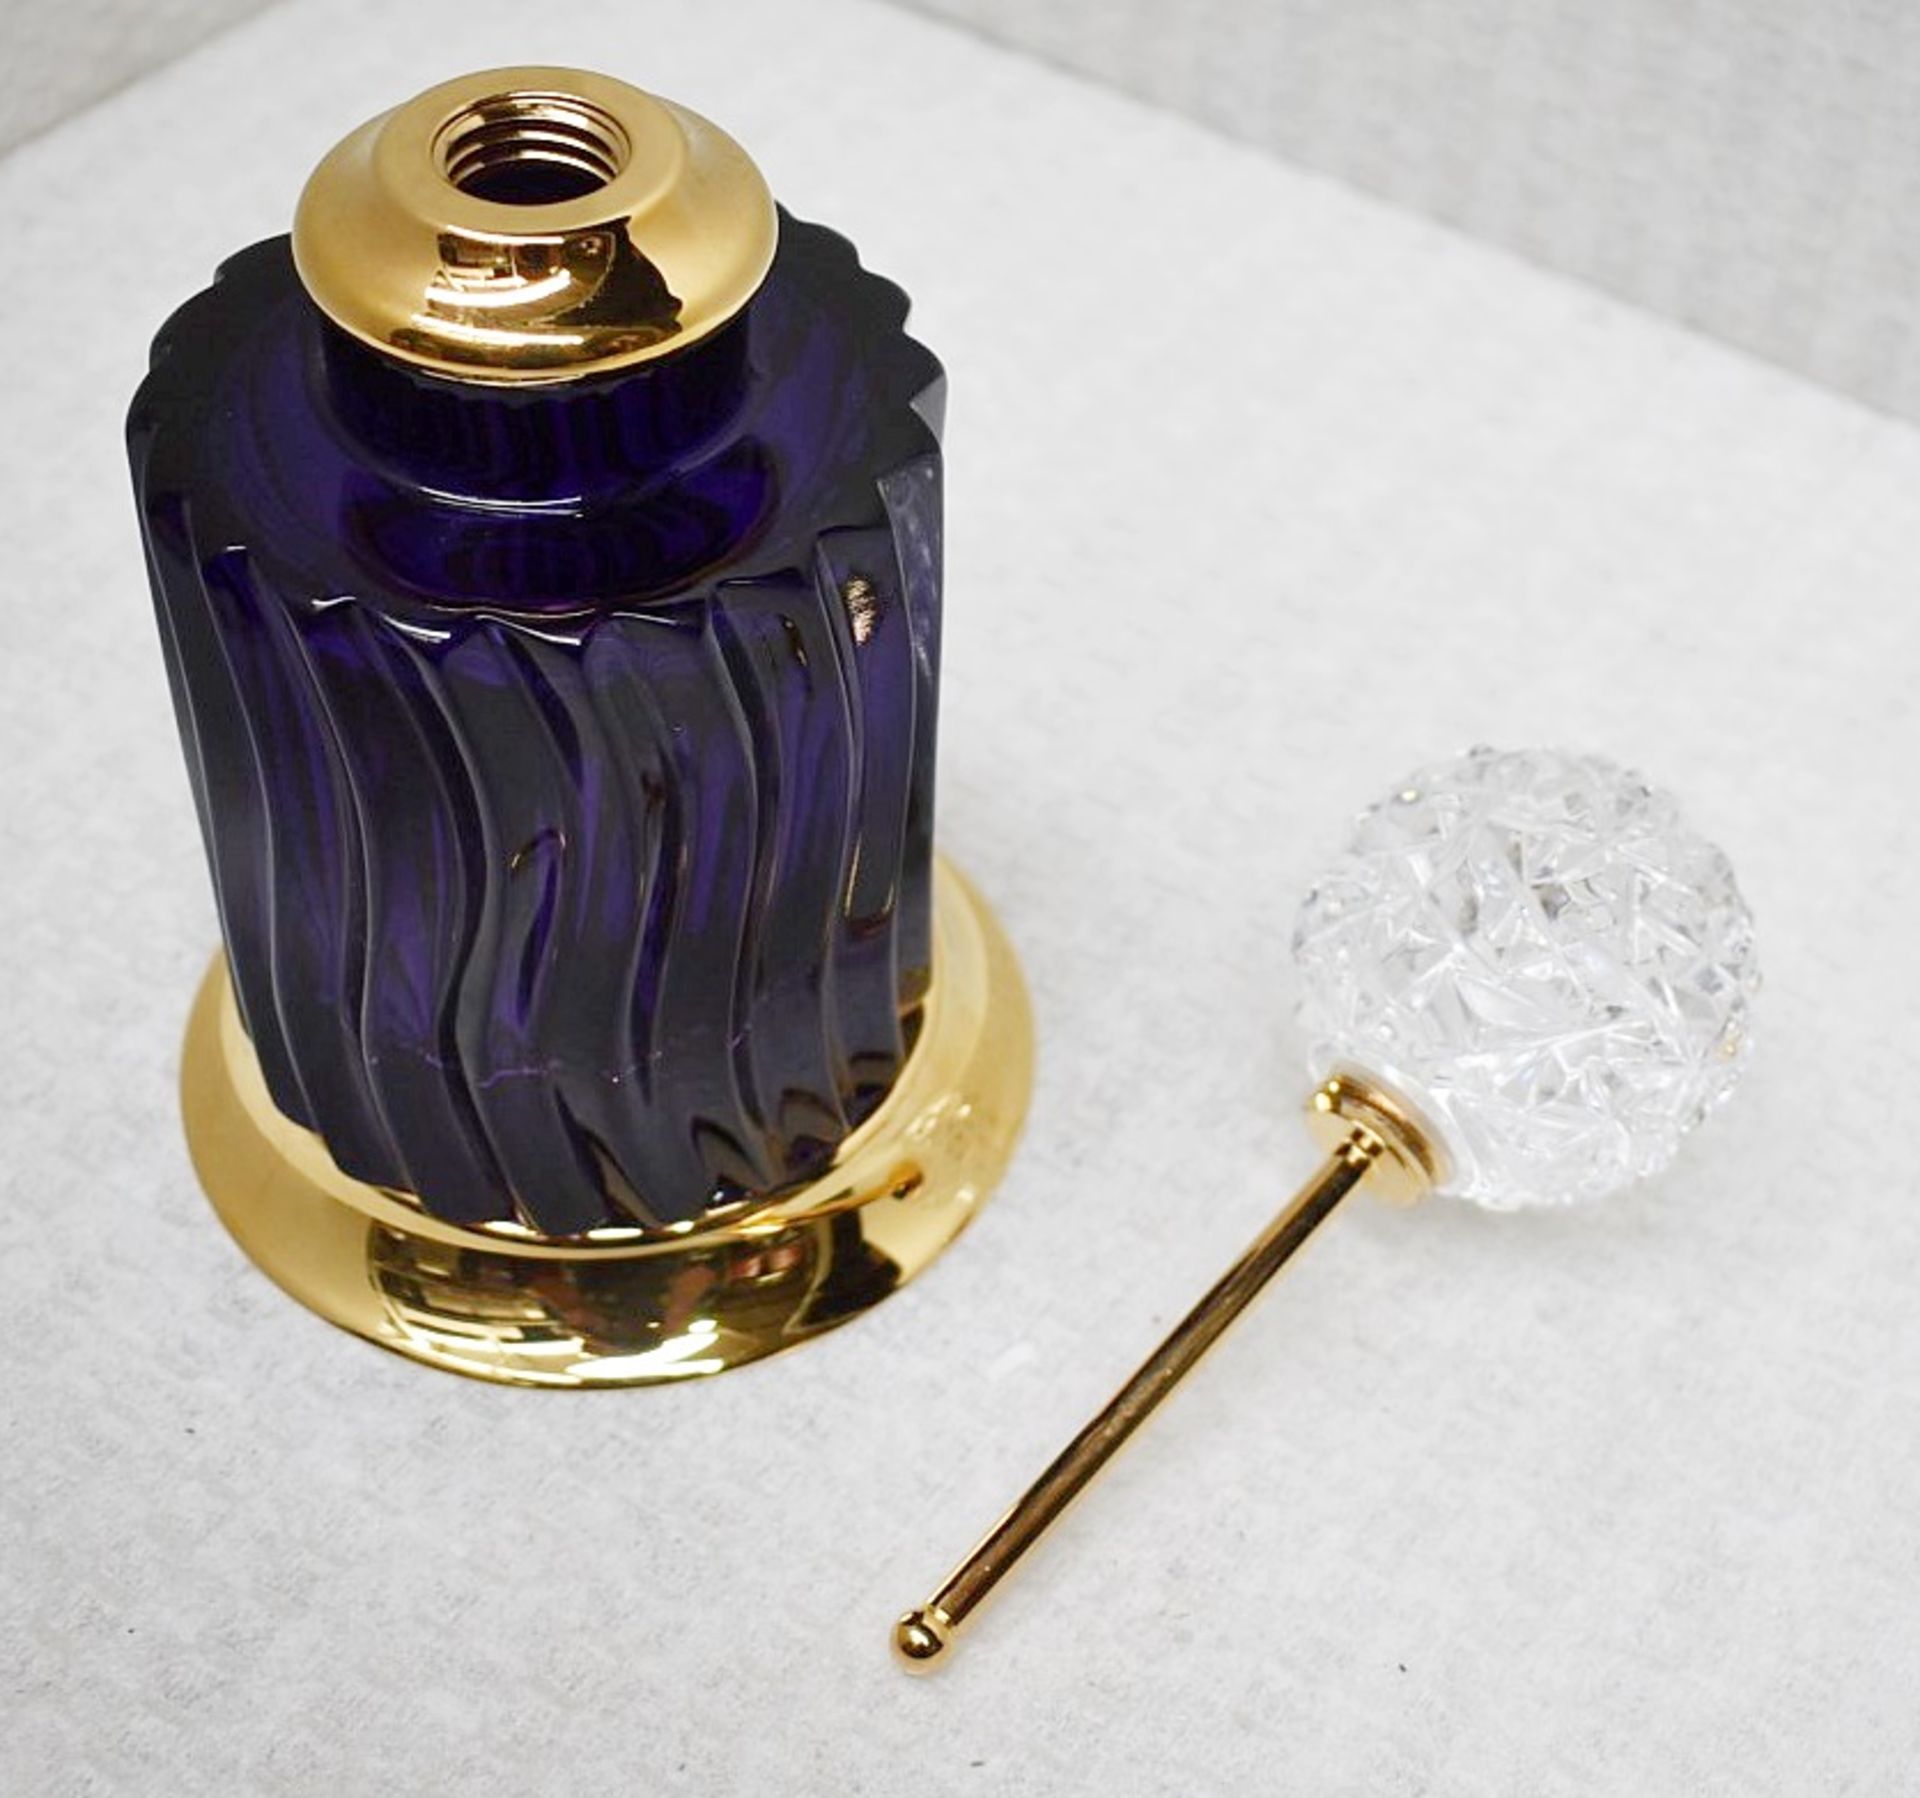 1 x BALDI 'Home Jewels' Italian Hand-crafted Artisan Crystal Perfume Bottle **Original RRP £1,075** - Image 2 of 4